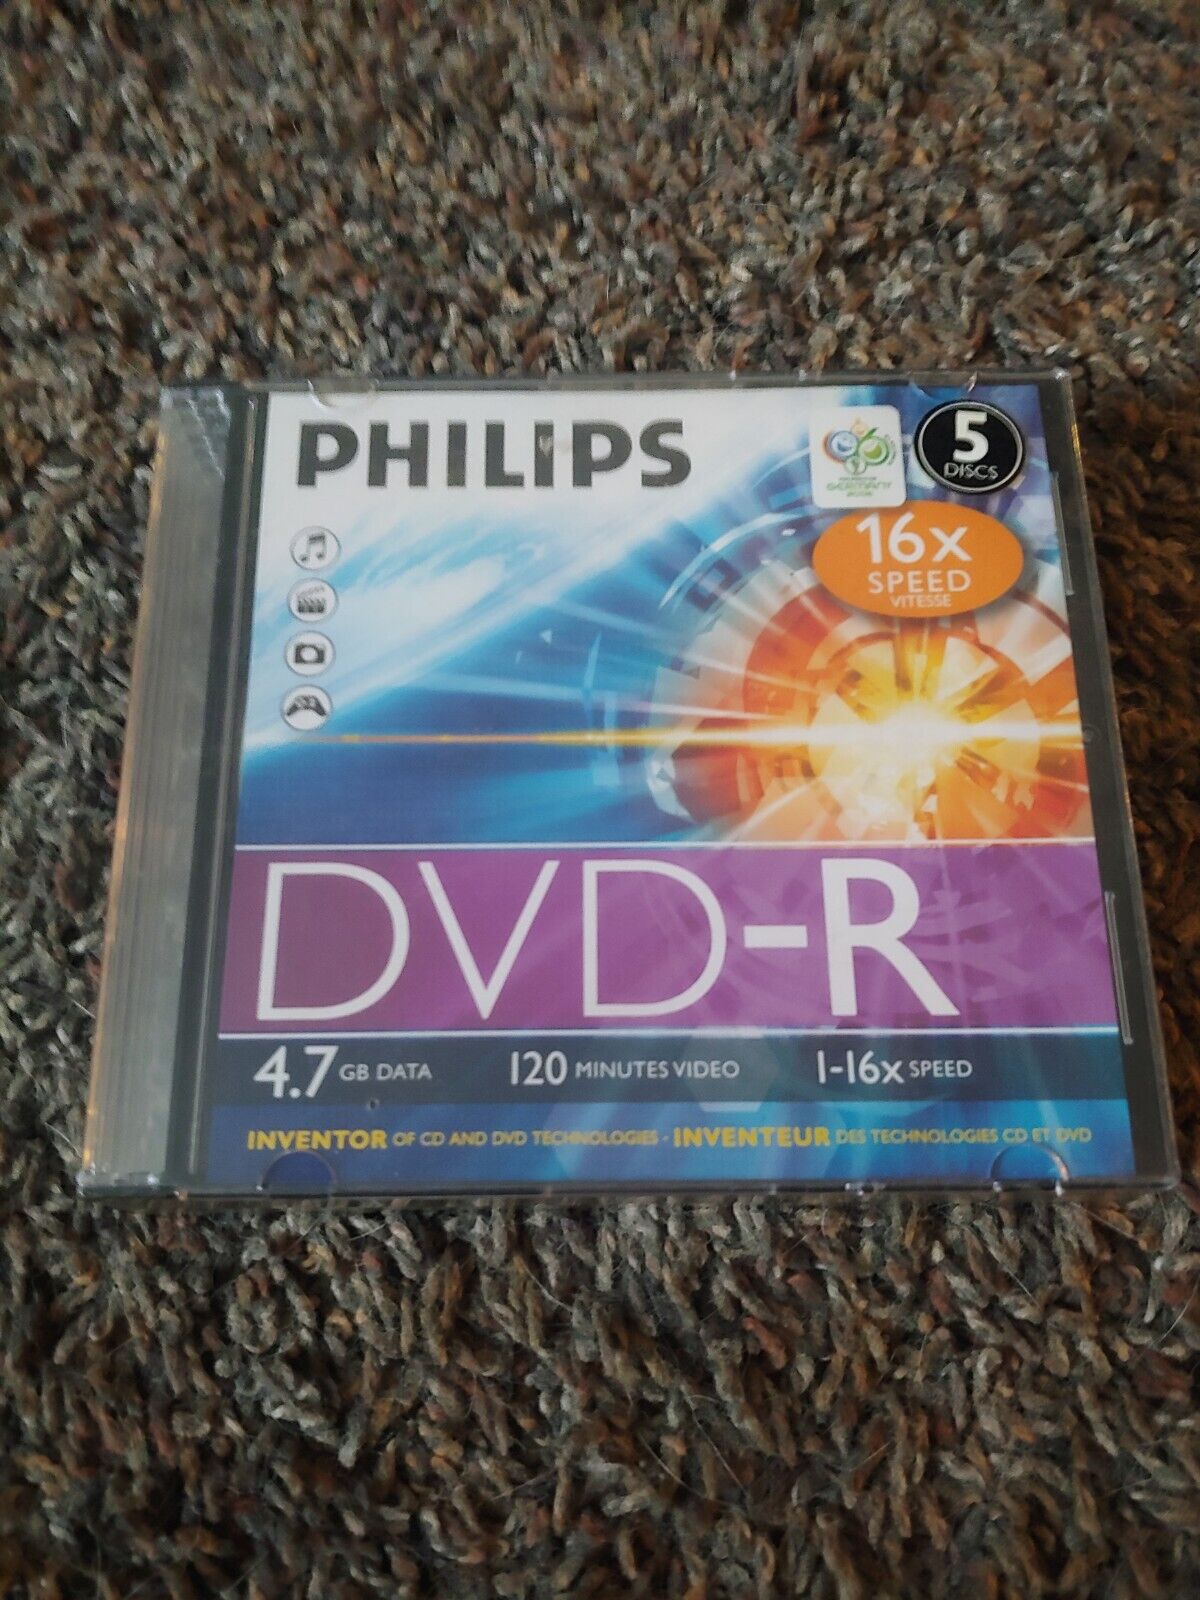 Philips DVD+R: 1-16x Speed, 120min, 4.7GB Slim Case DR4S6S05F/17 - 5 Pack